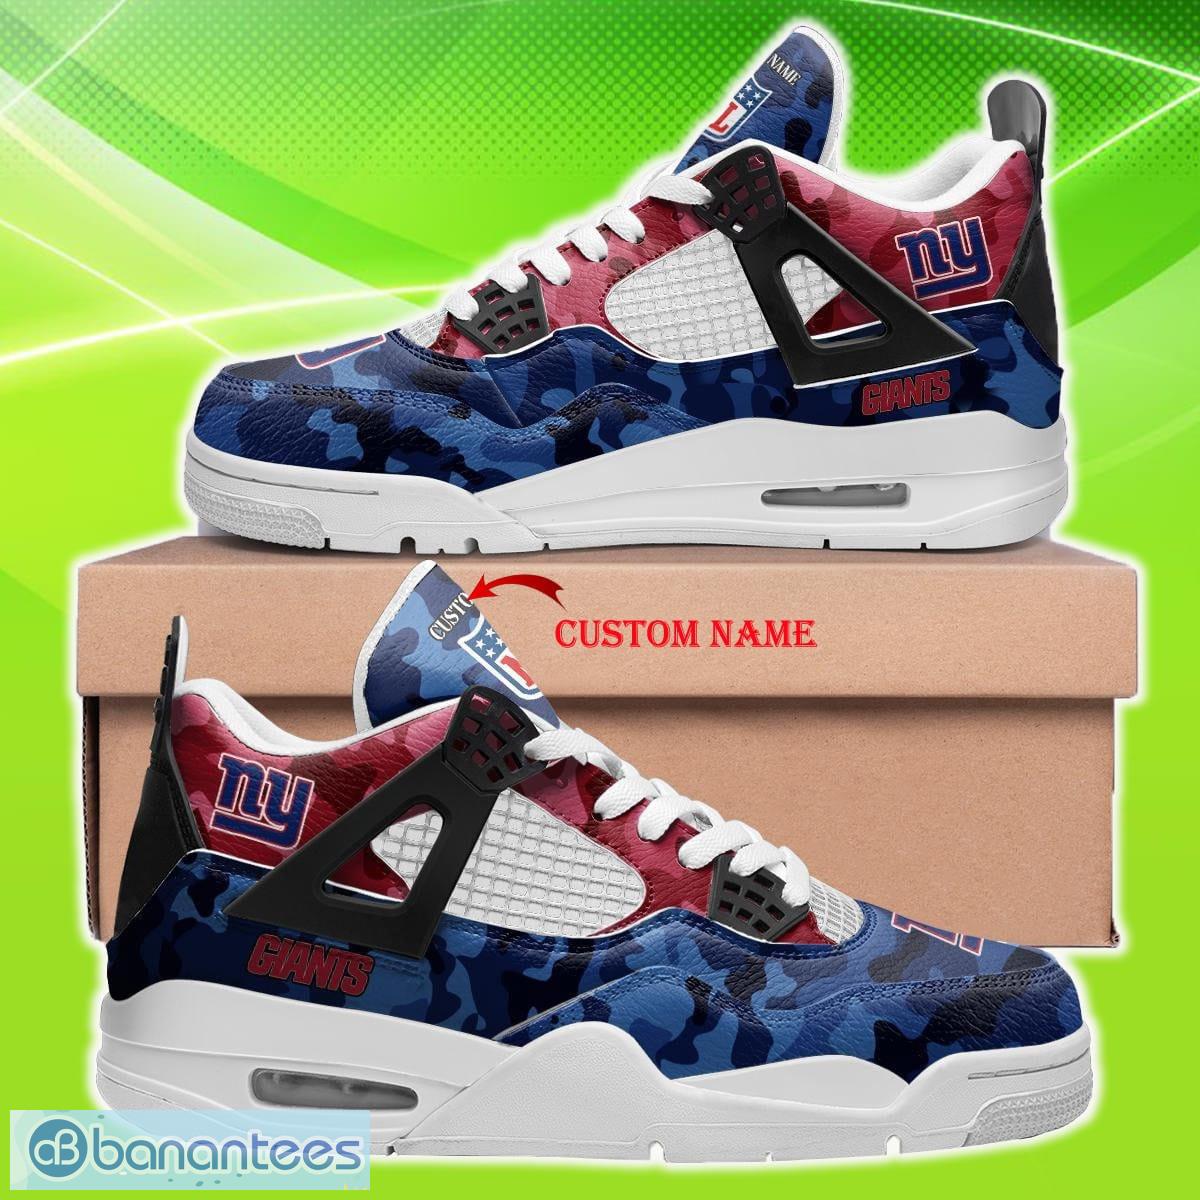 Camo Best York Giants Custom Name Air Jordan 4 Shoes Camo Best For Men And Women Gift Fans - New York Giants Personalized Jordan 4_1